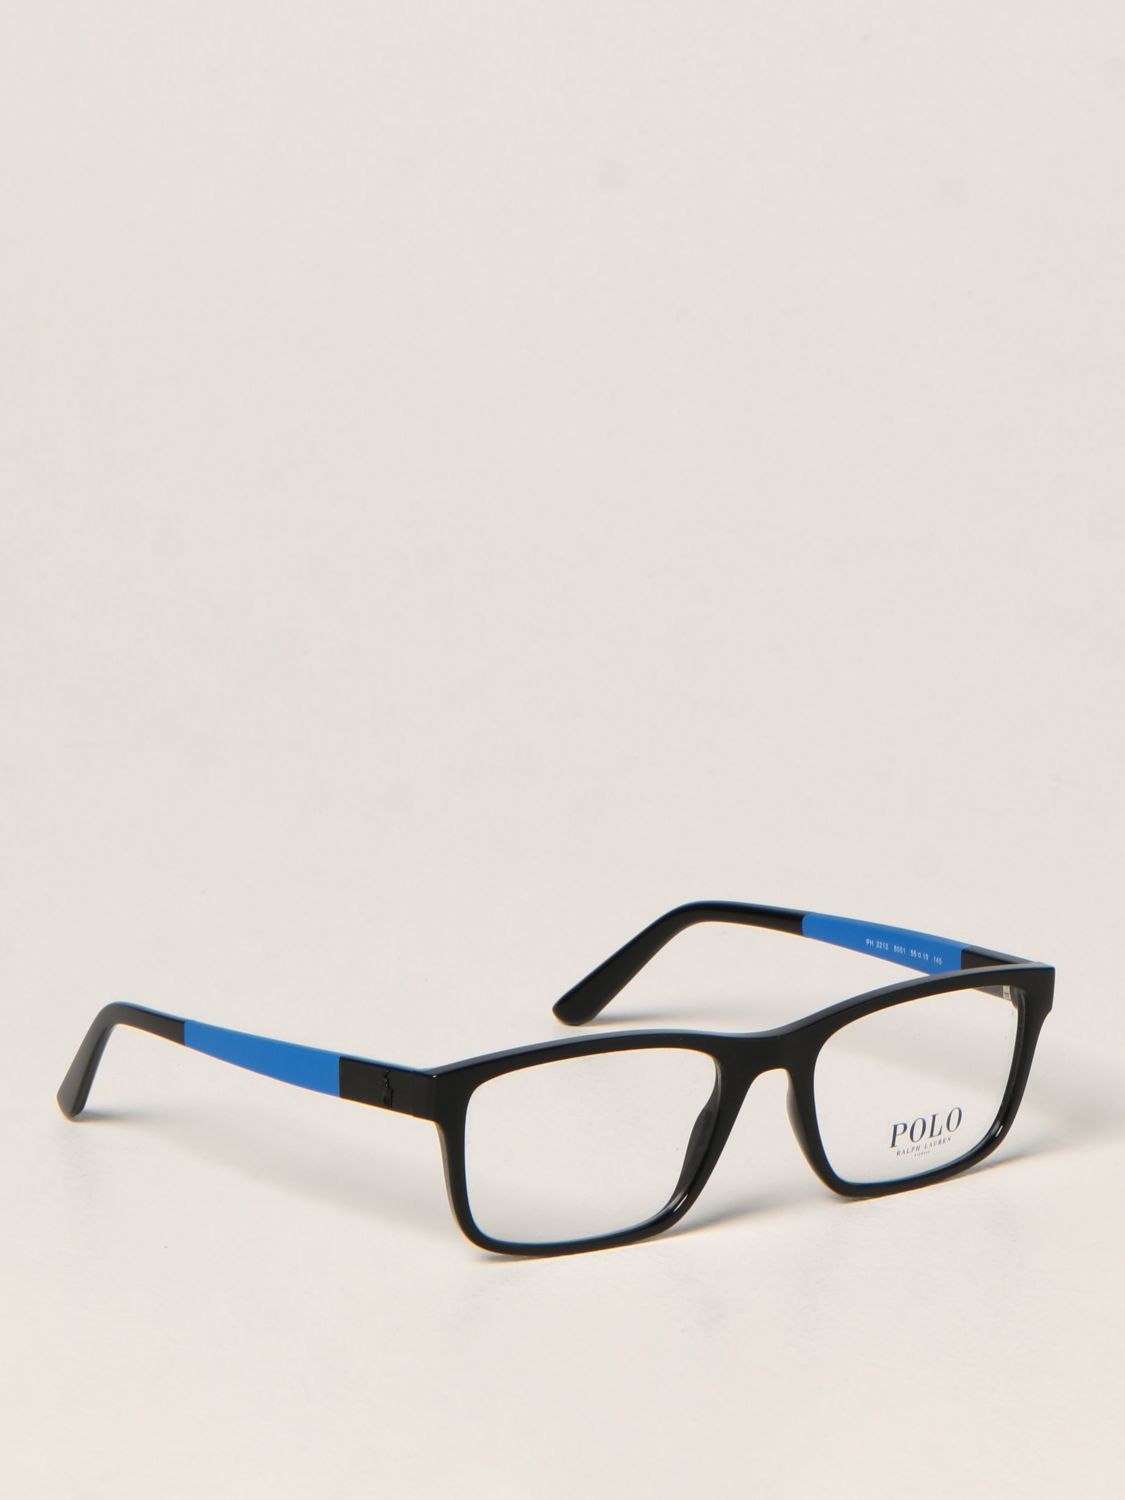 Polo Ralph Lauren Outlet: sunglasses for man - Black 2 | Polo Ralph Lauren  sunglasses PH 2212 online on 